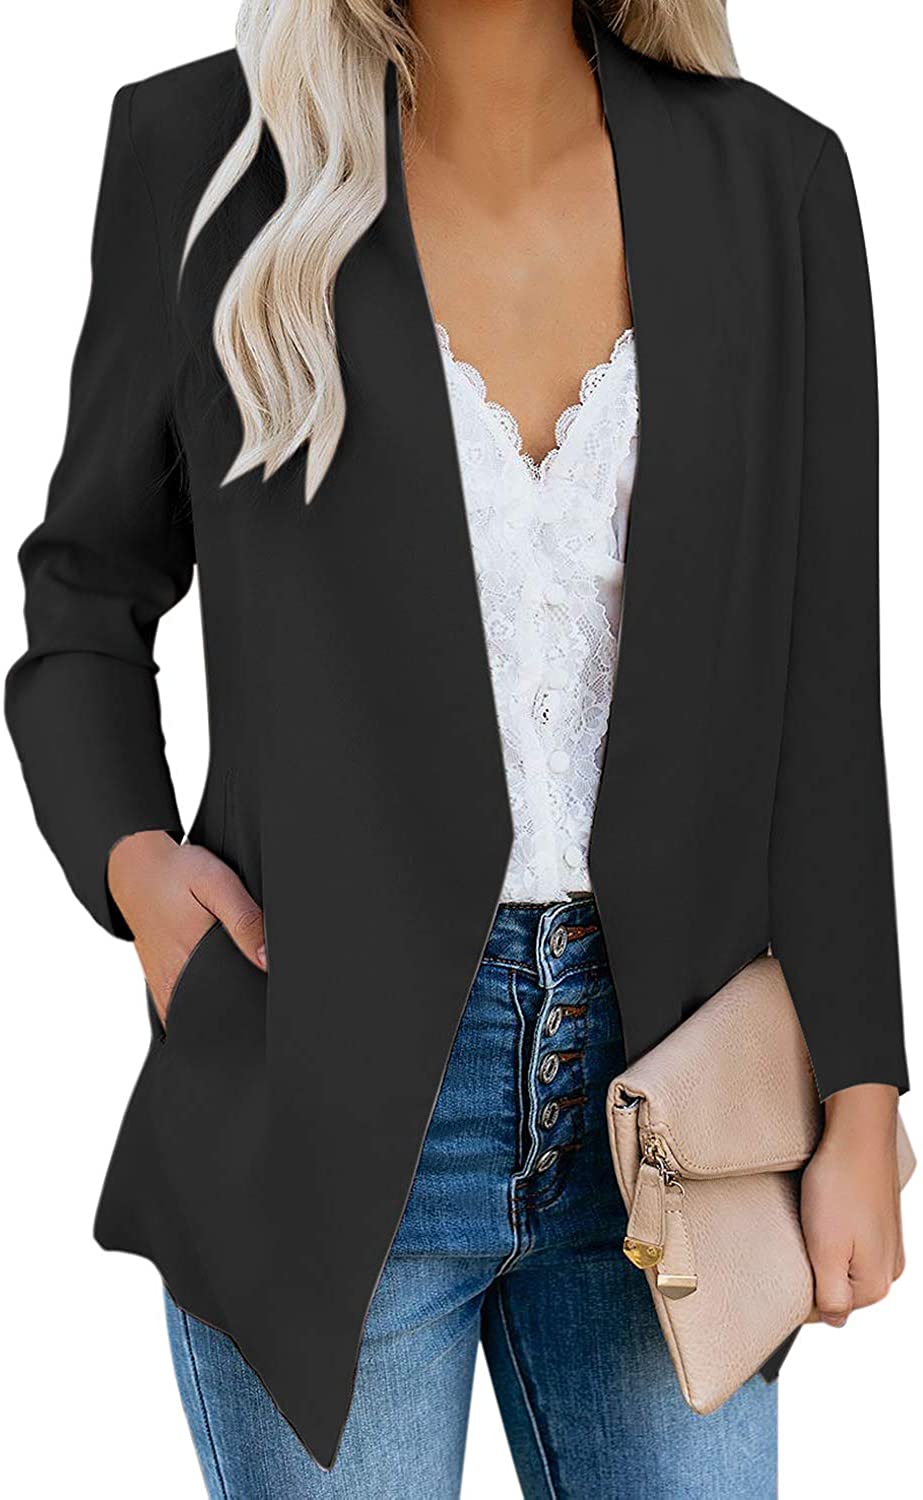 GRAPENT Women's Open Front Business Casual Pockets Work Office Blazer Jacket Suit 